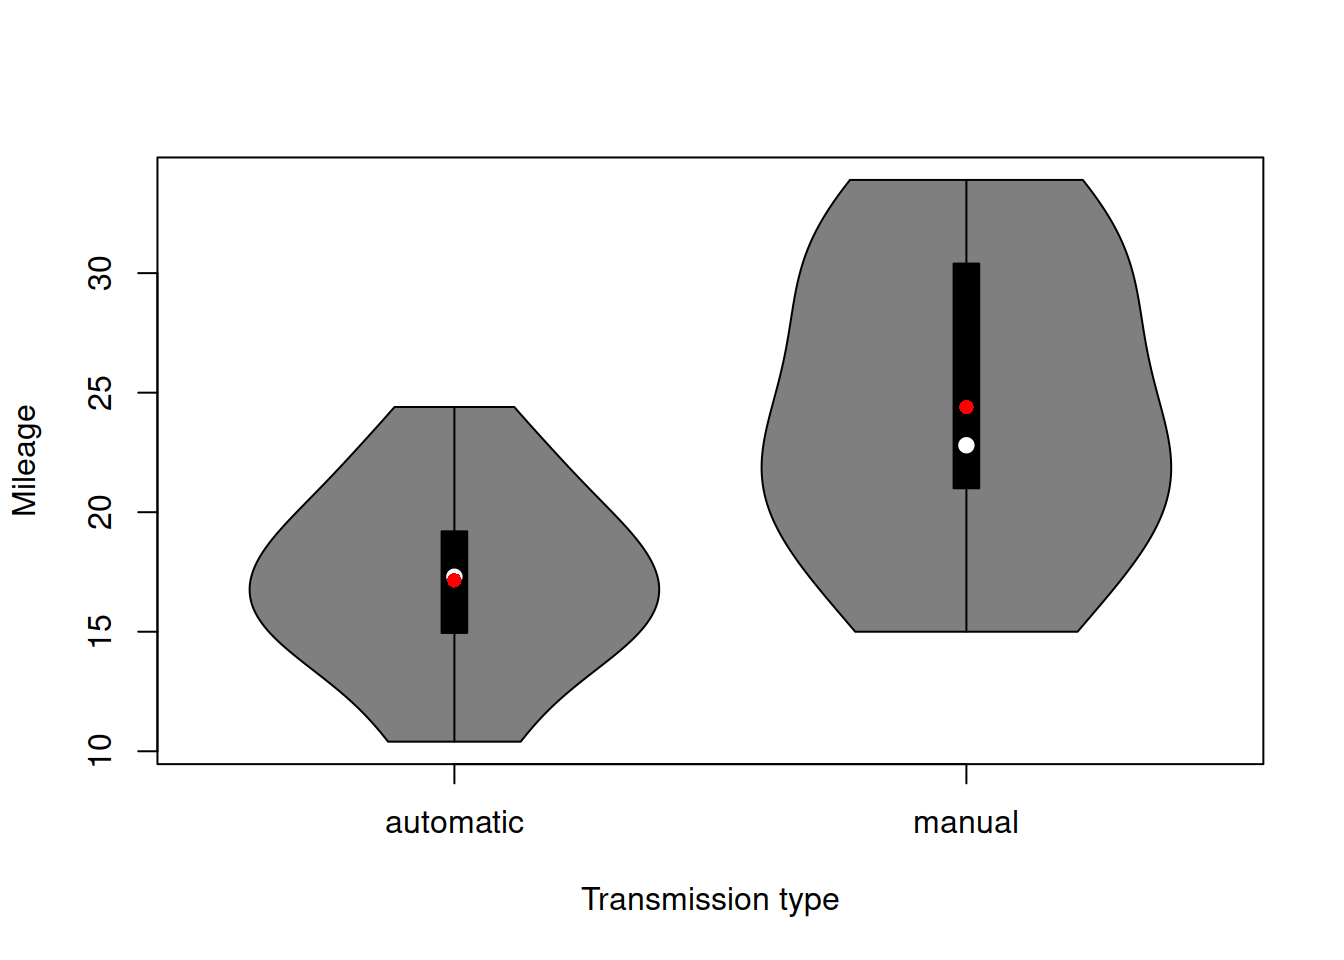 Violin plot of mileage vs transmission type.